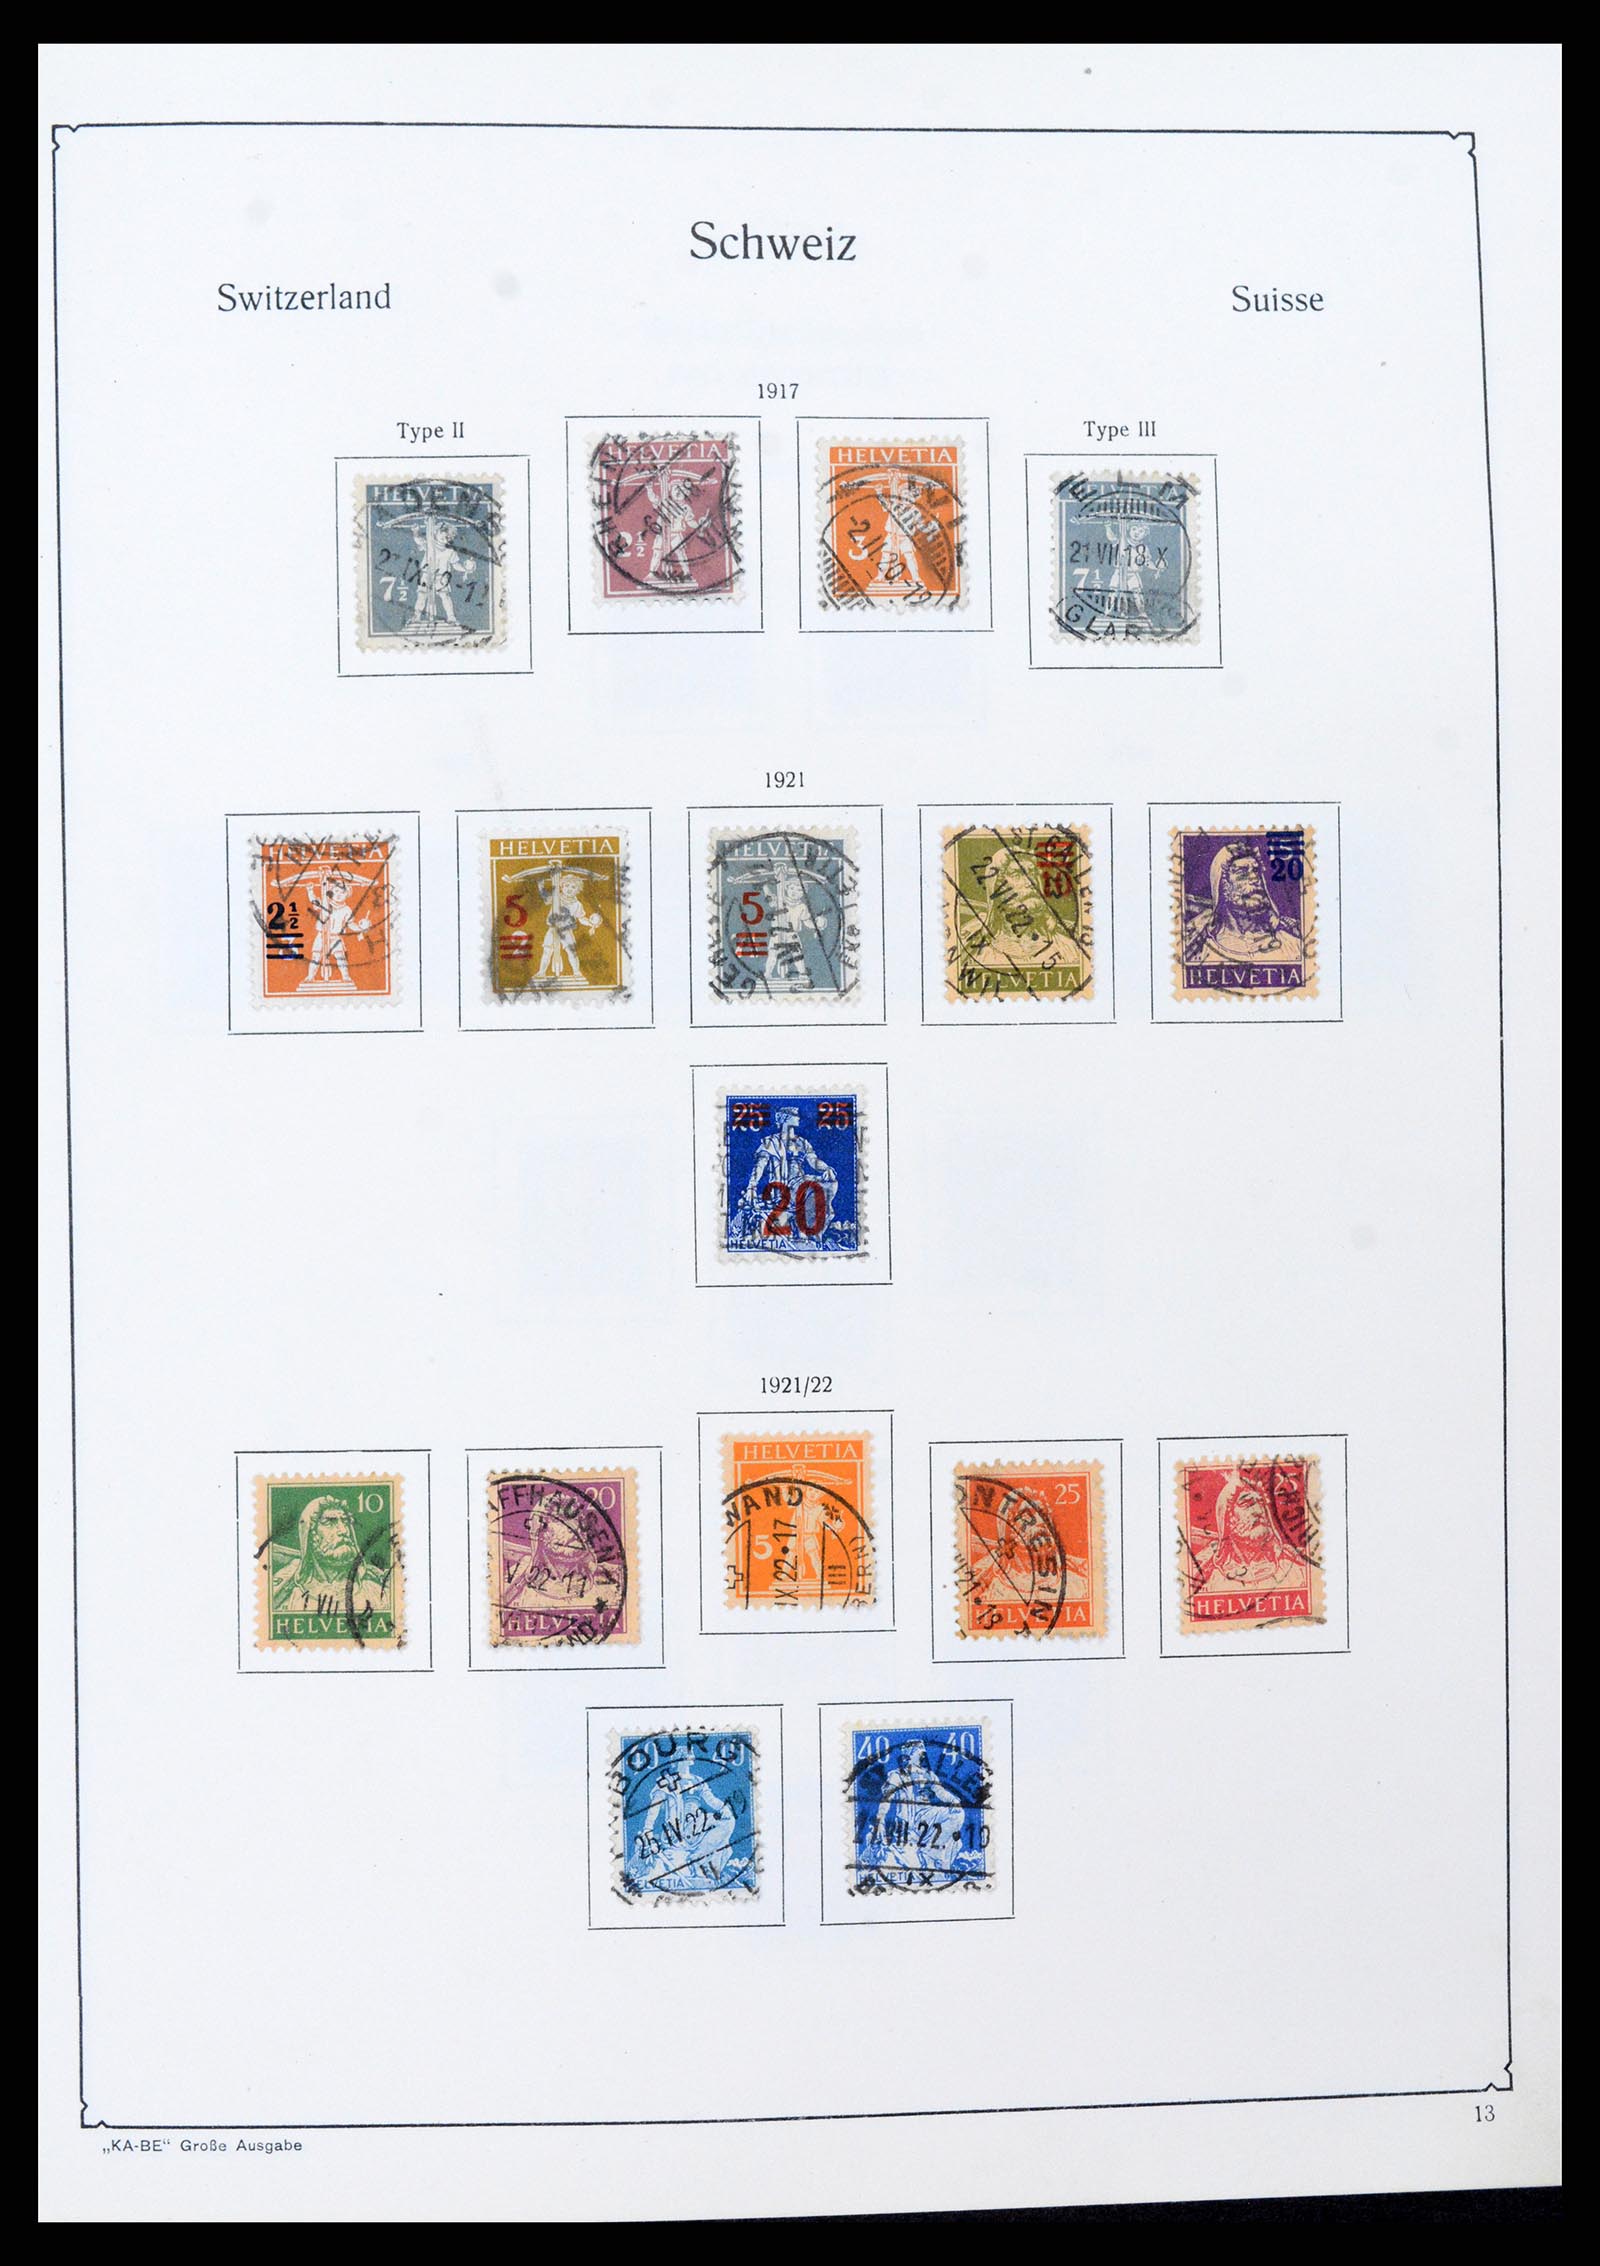 37588 012 - Stamp collection 37588 Switzerland 1854-1974.